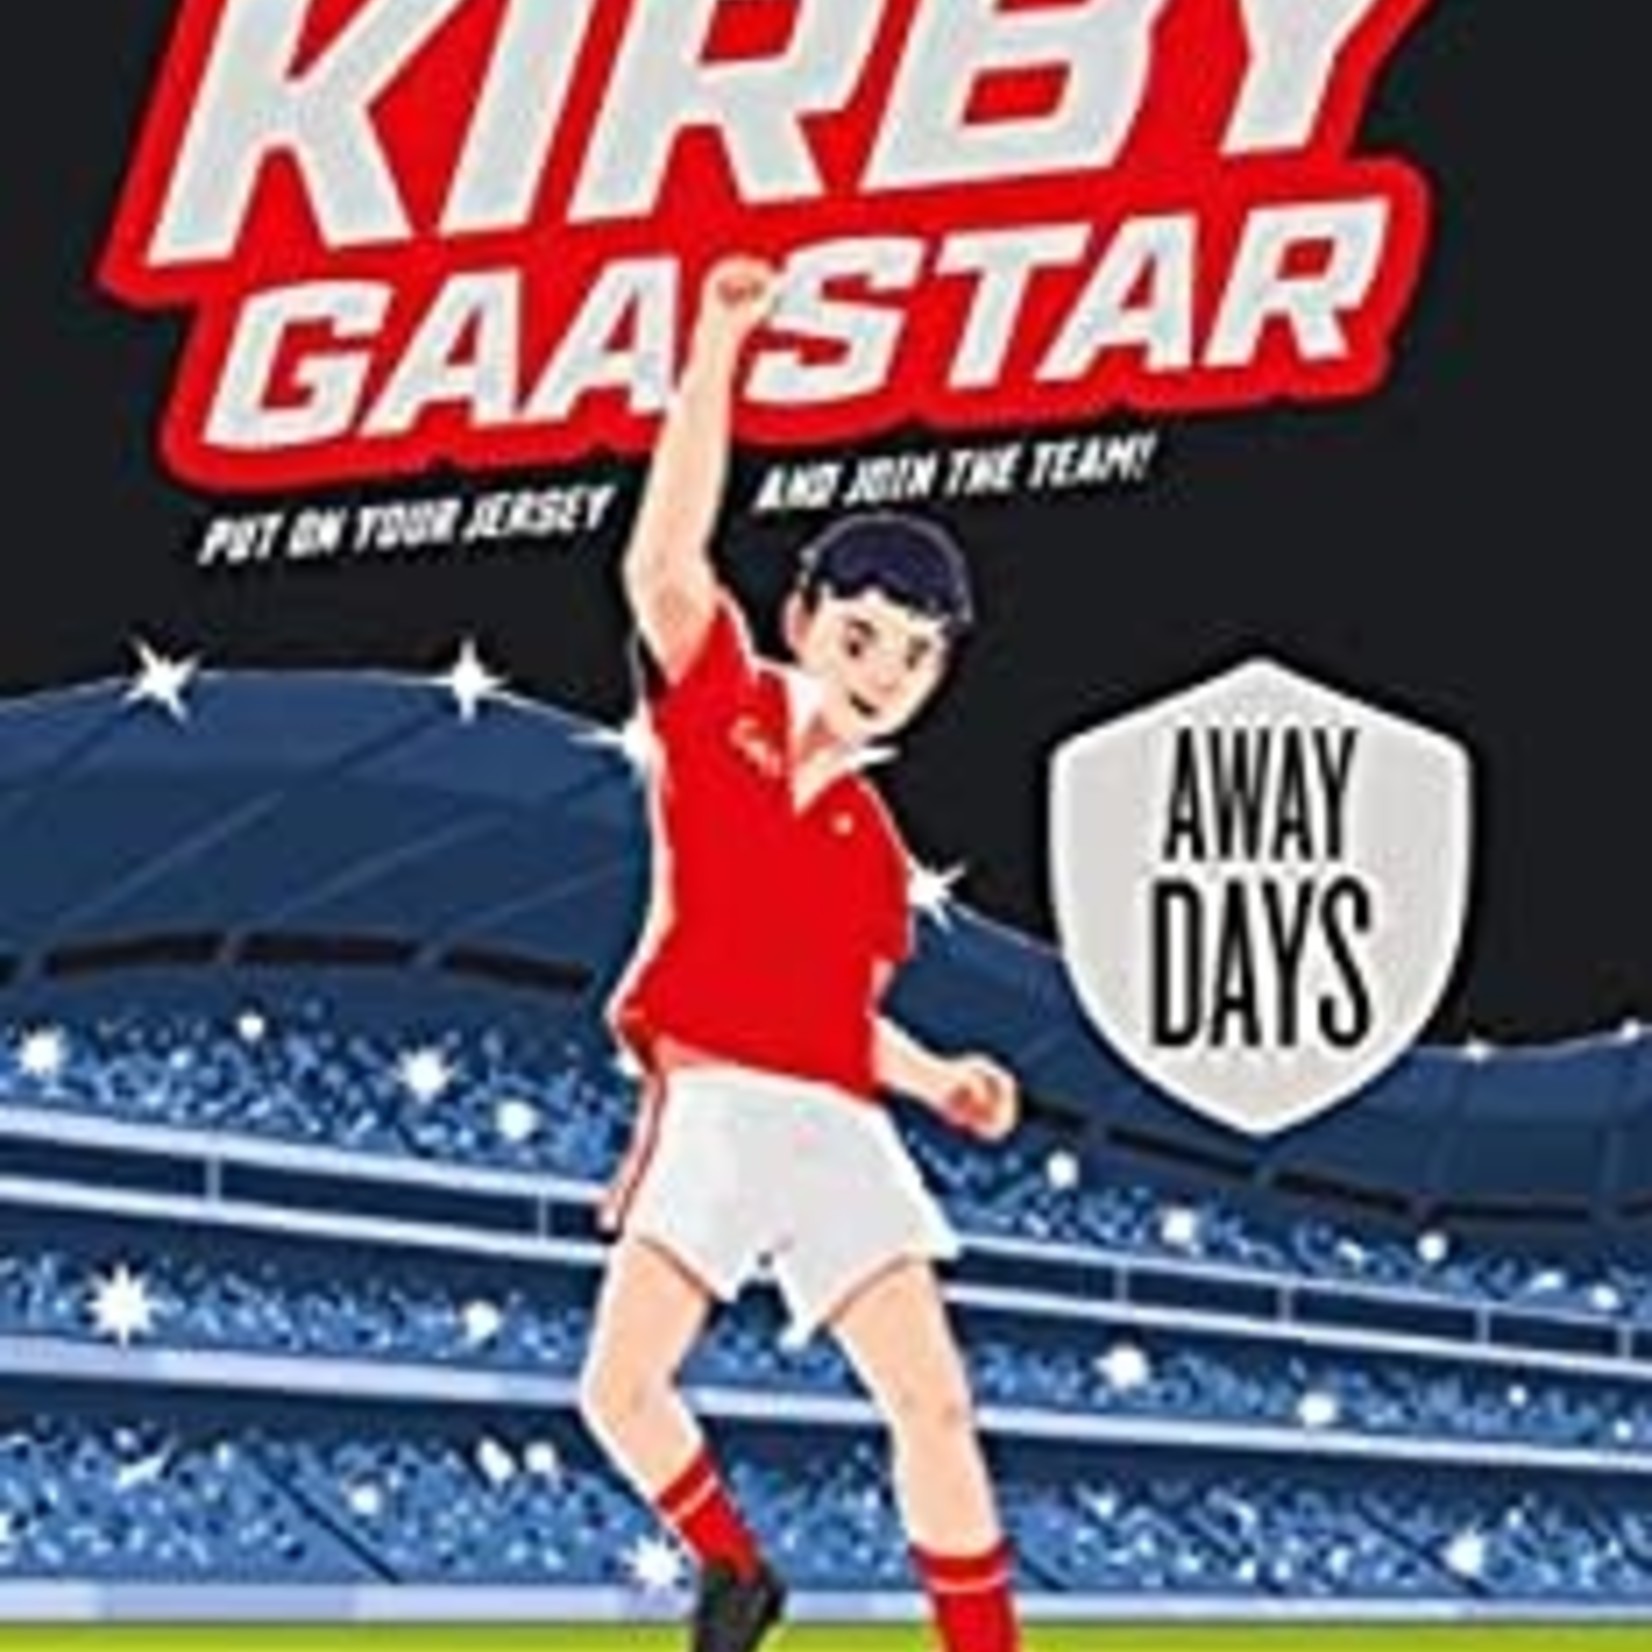 Celtic Books "Declan Kirby GAA Star: Away Days"